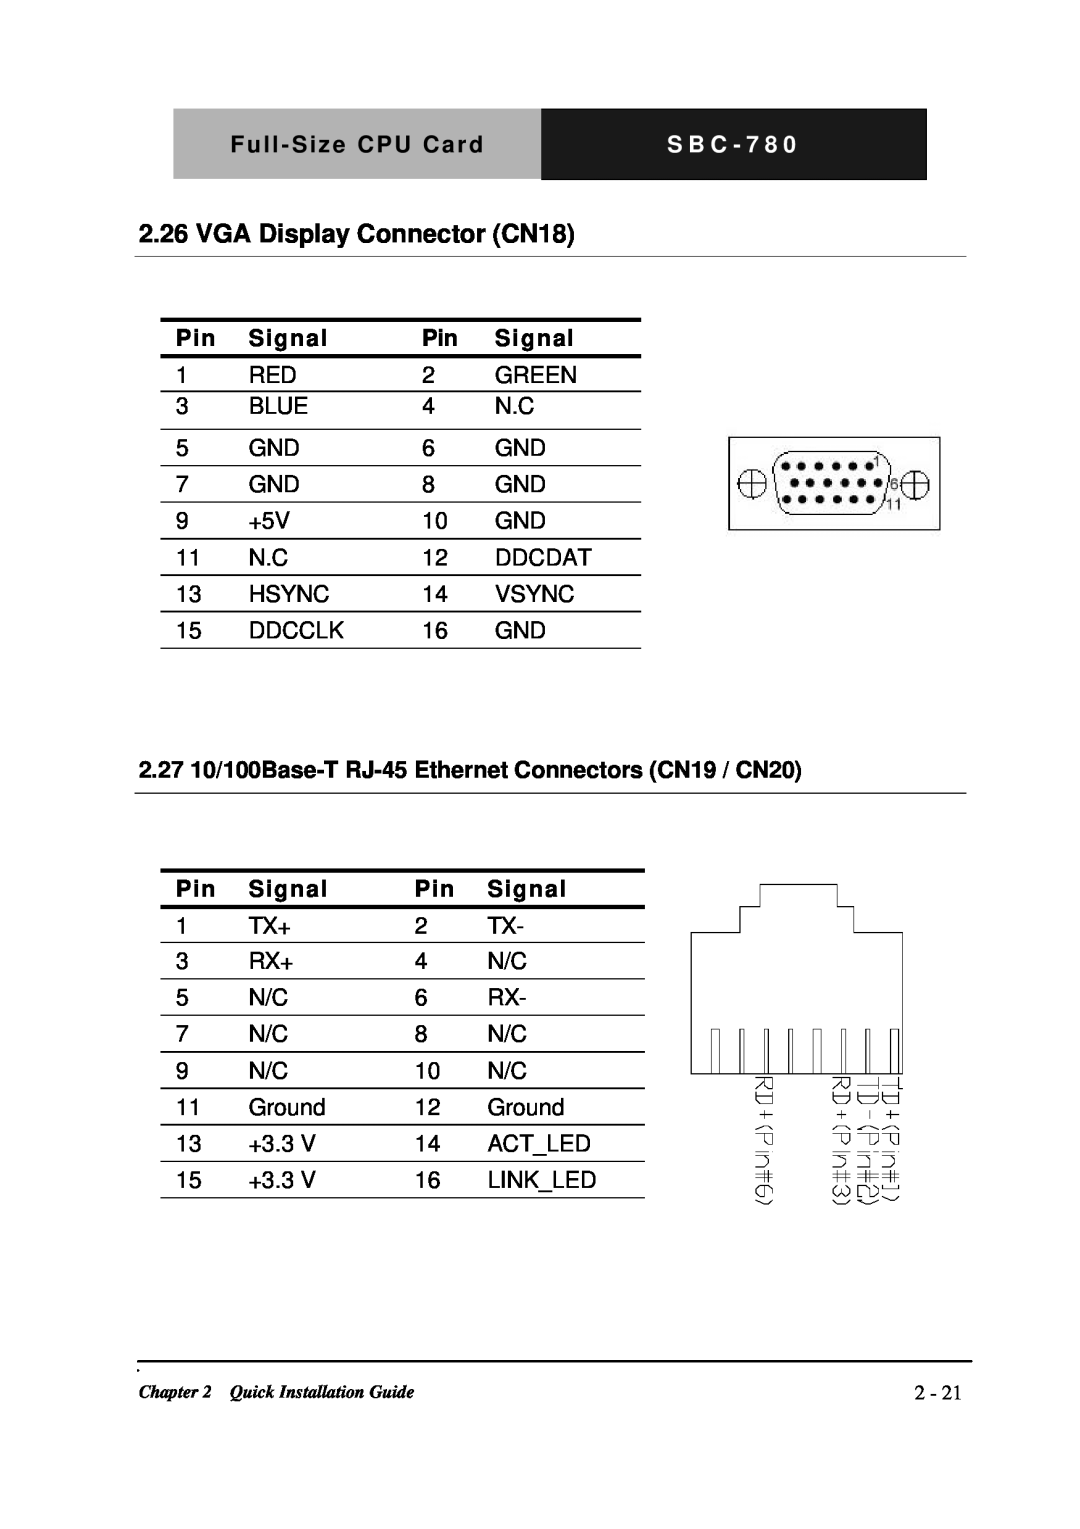 Intel SBC-780 manual VGA Display Connector CN18, S B C - 7 8 